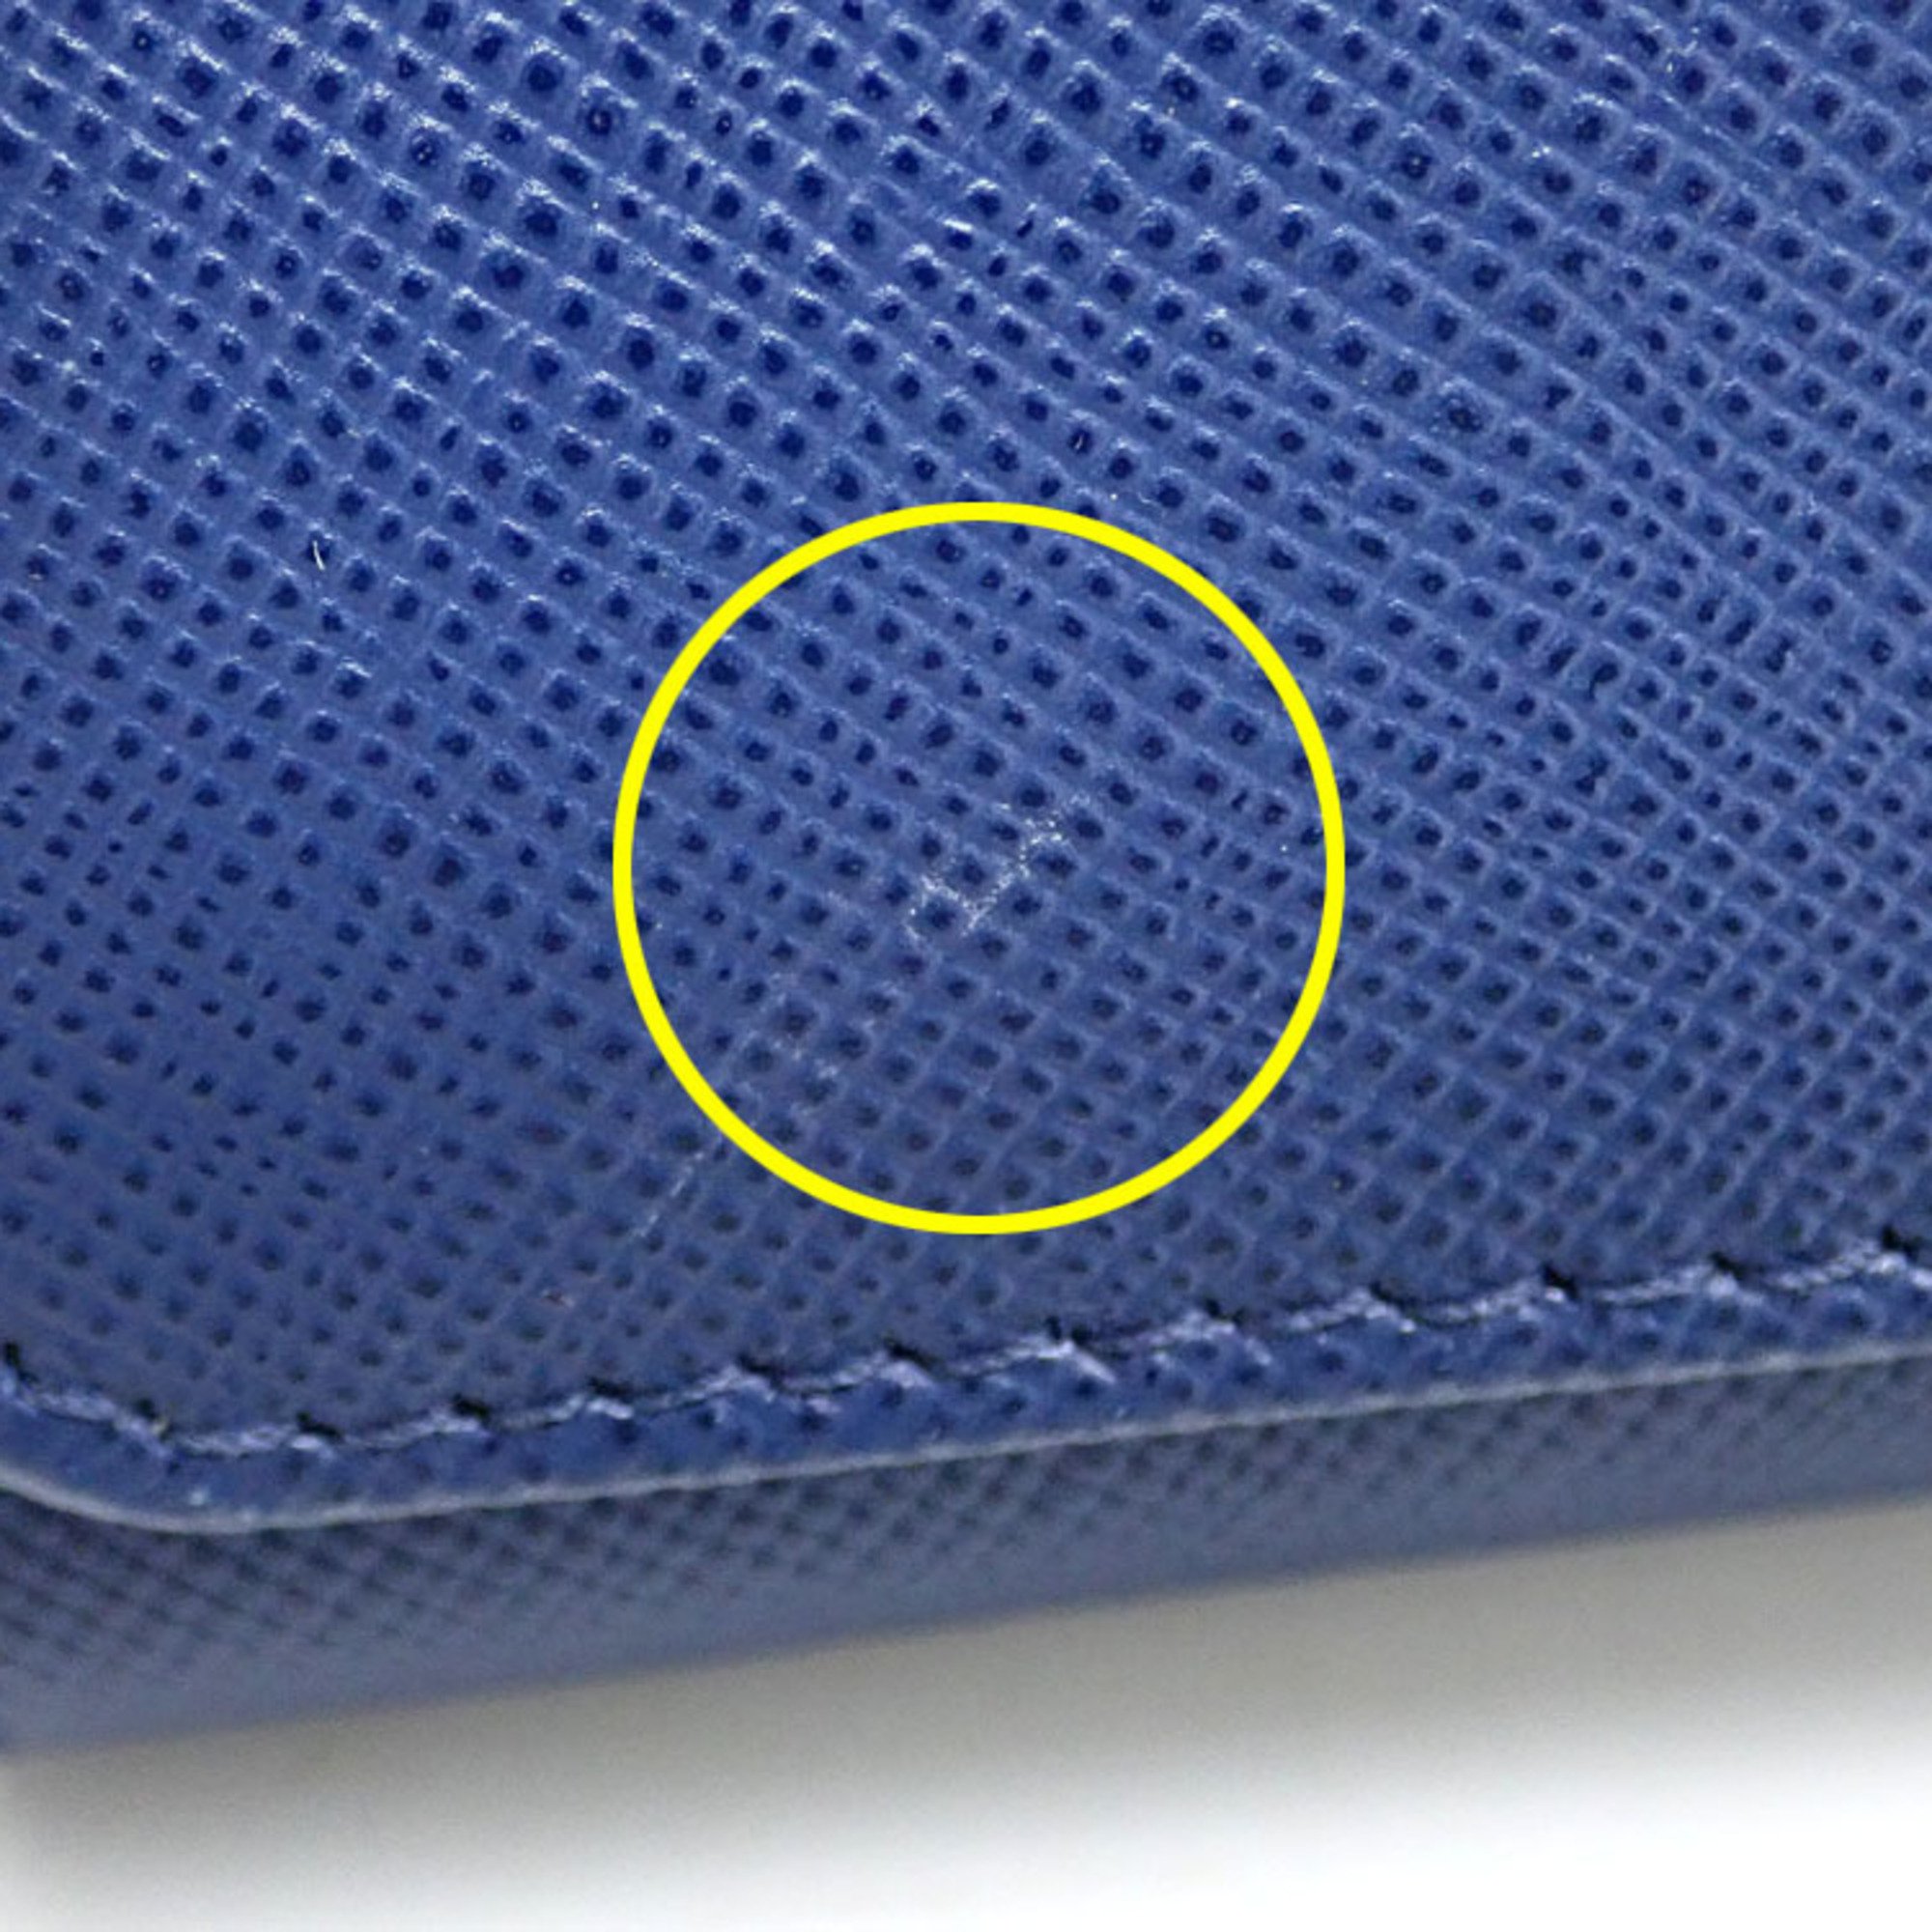 Prada Tri-fold Wallet for Women, Blue, Saffiano Leather, 1MH176